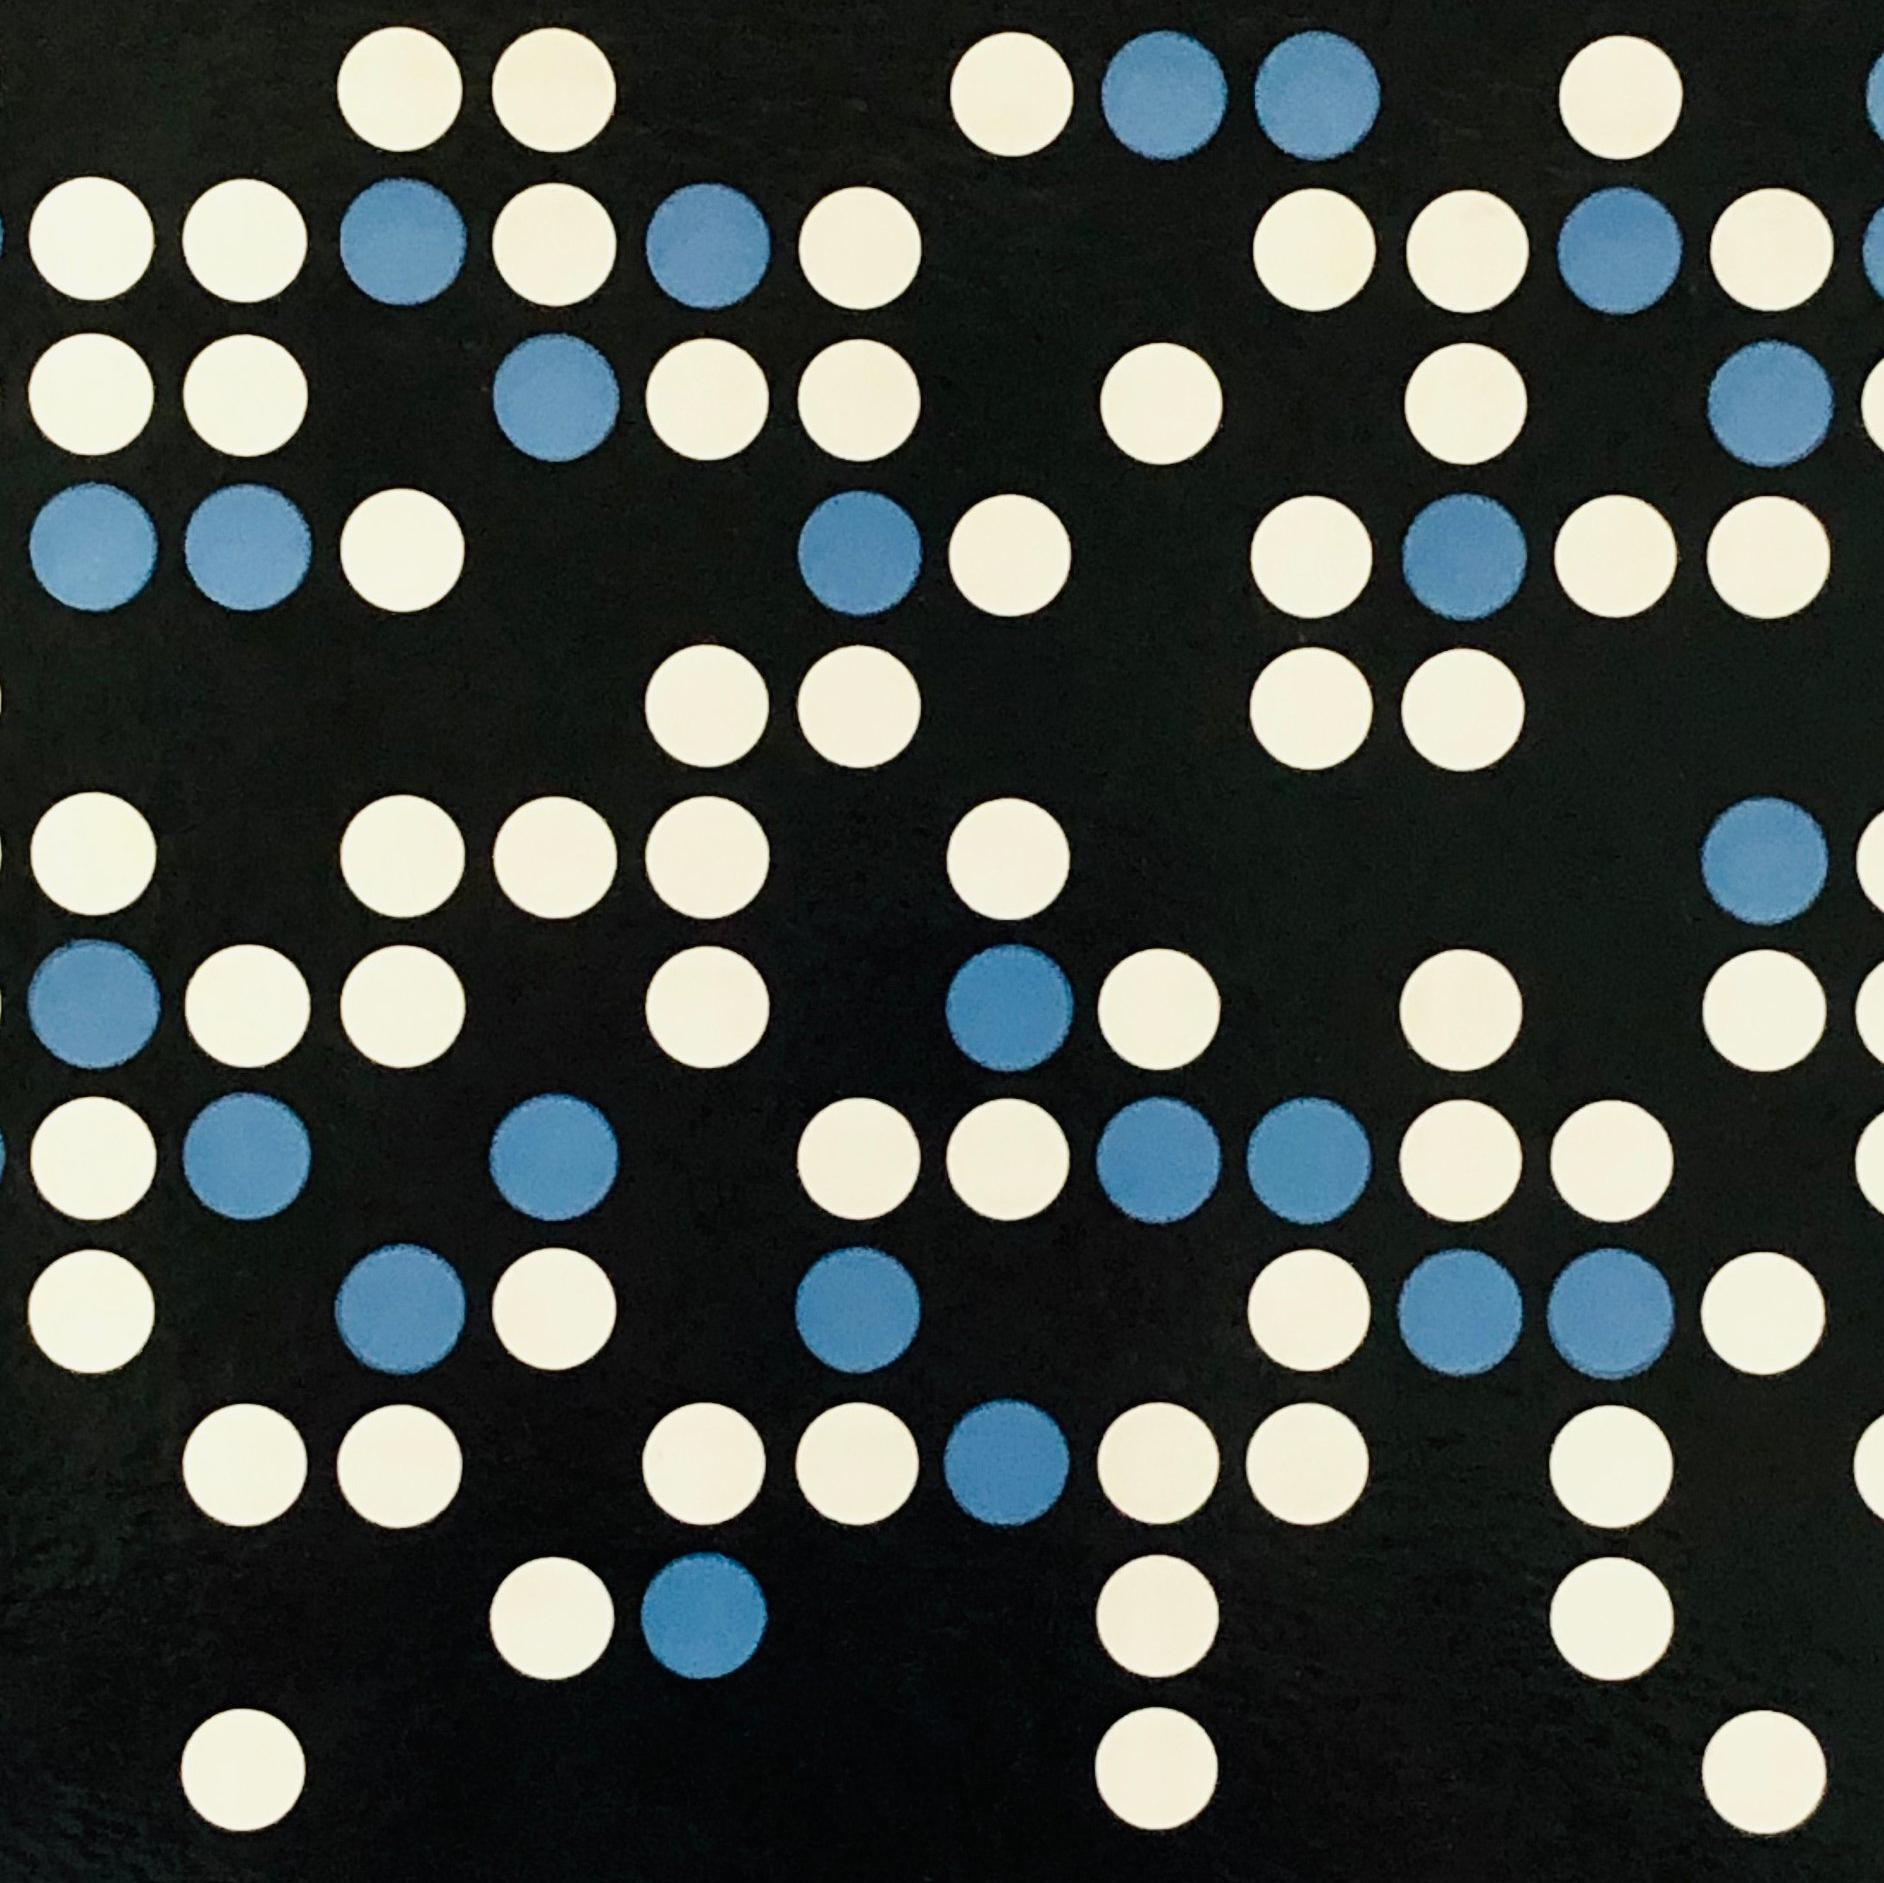 Josef Albers vinyl record art (1950s Albers)  2